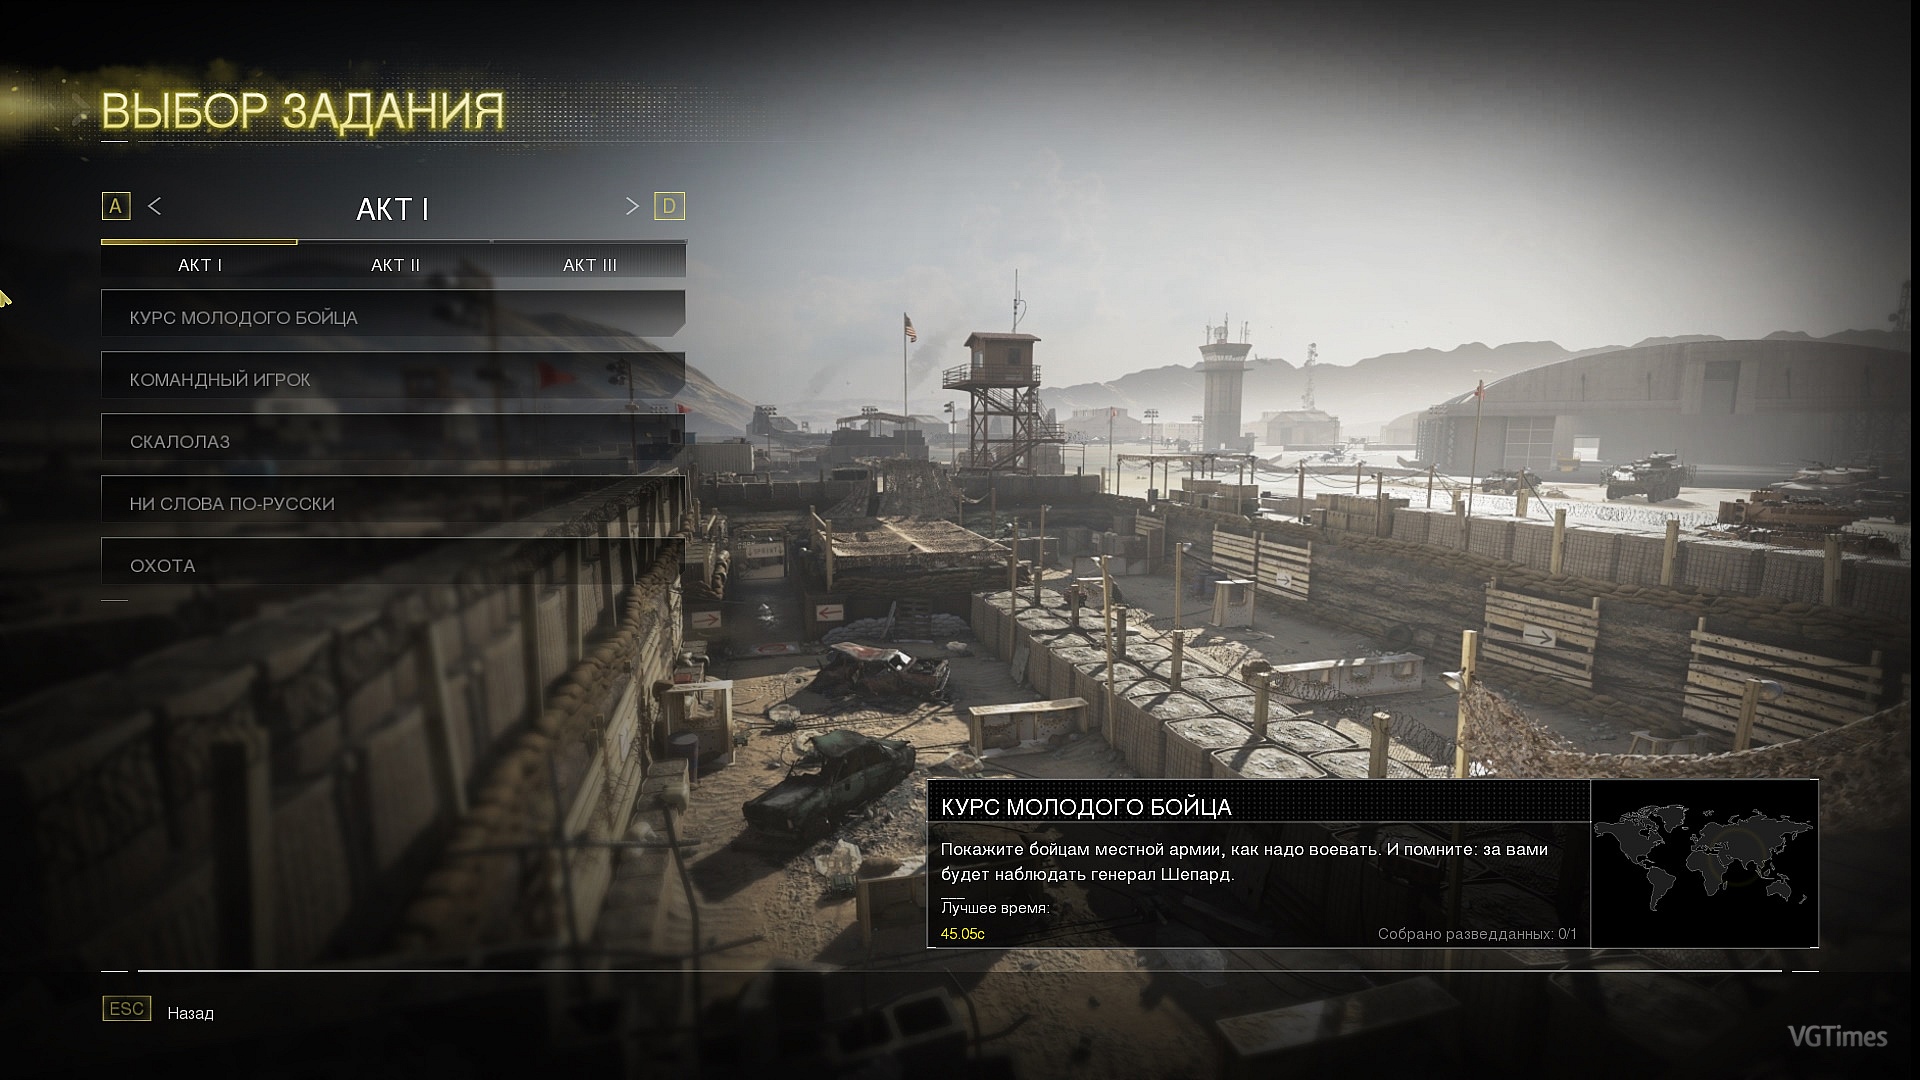 Call of Duty: Modern Warfare 2 Campaign Remastered PS4 Digital - SaveGames  - Games Digitais Para o seu console